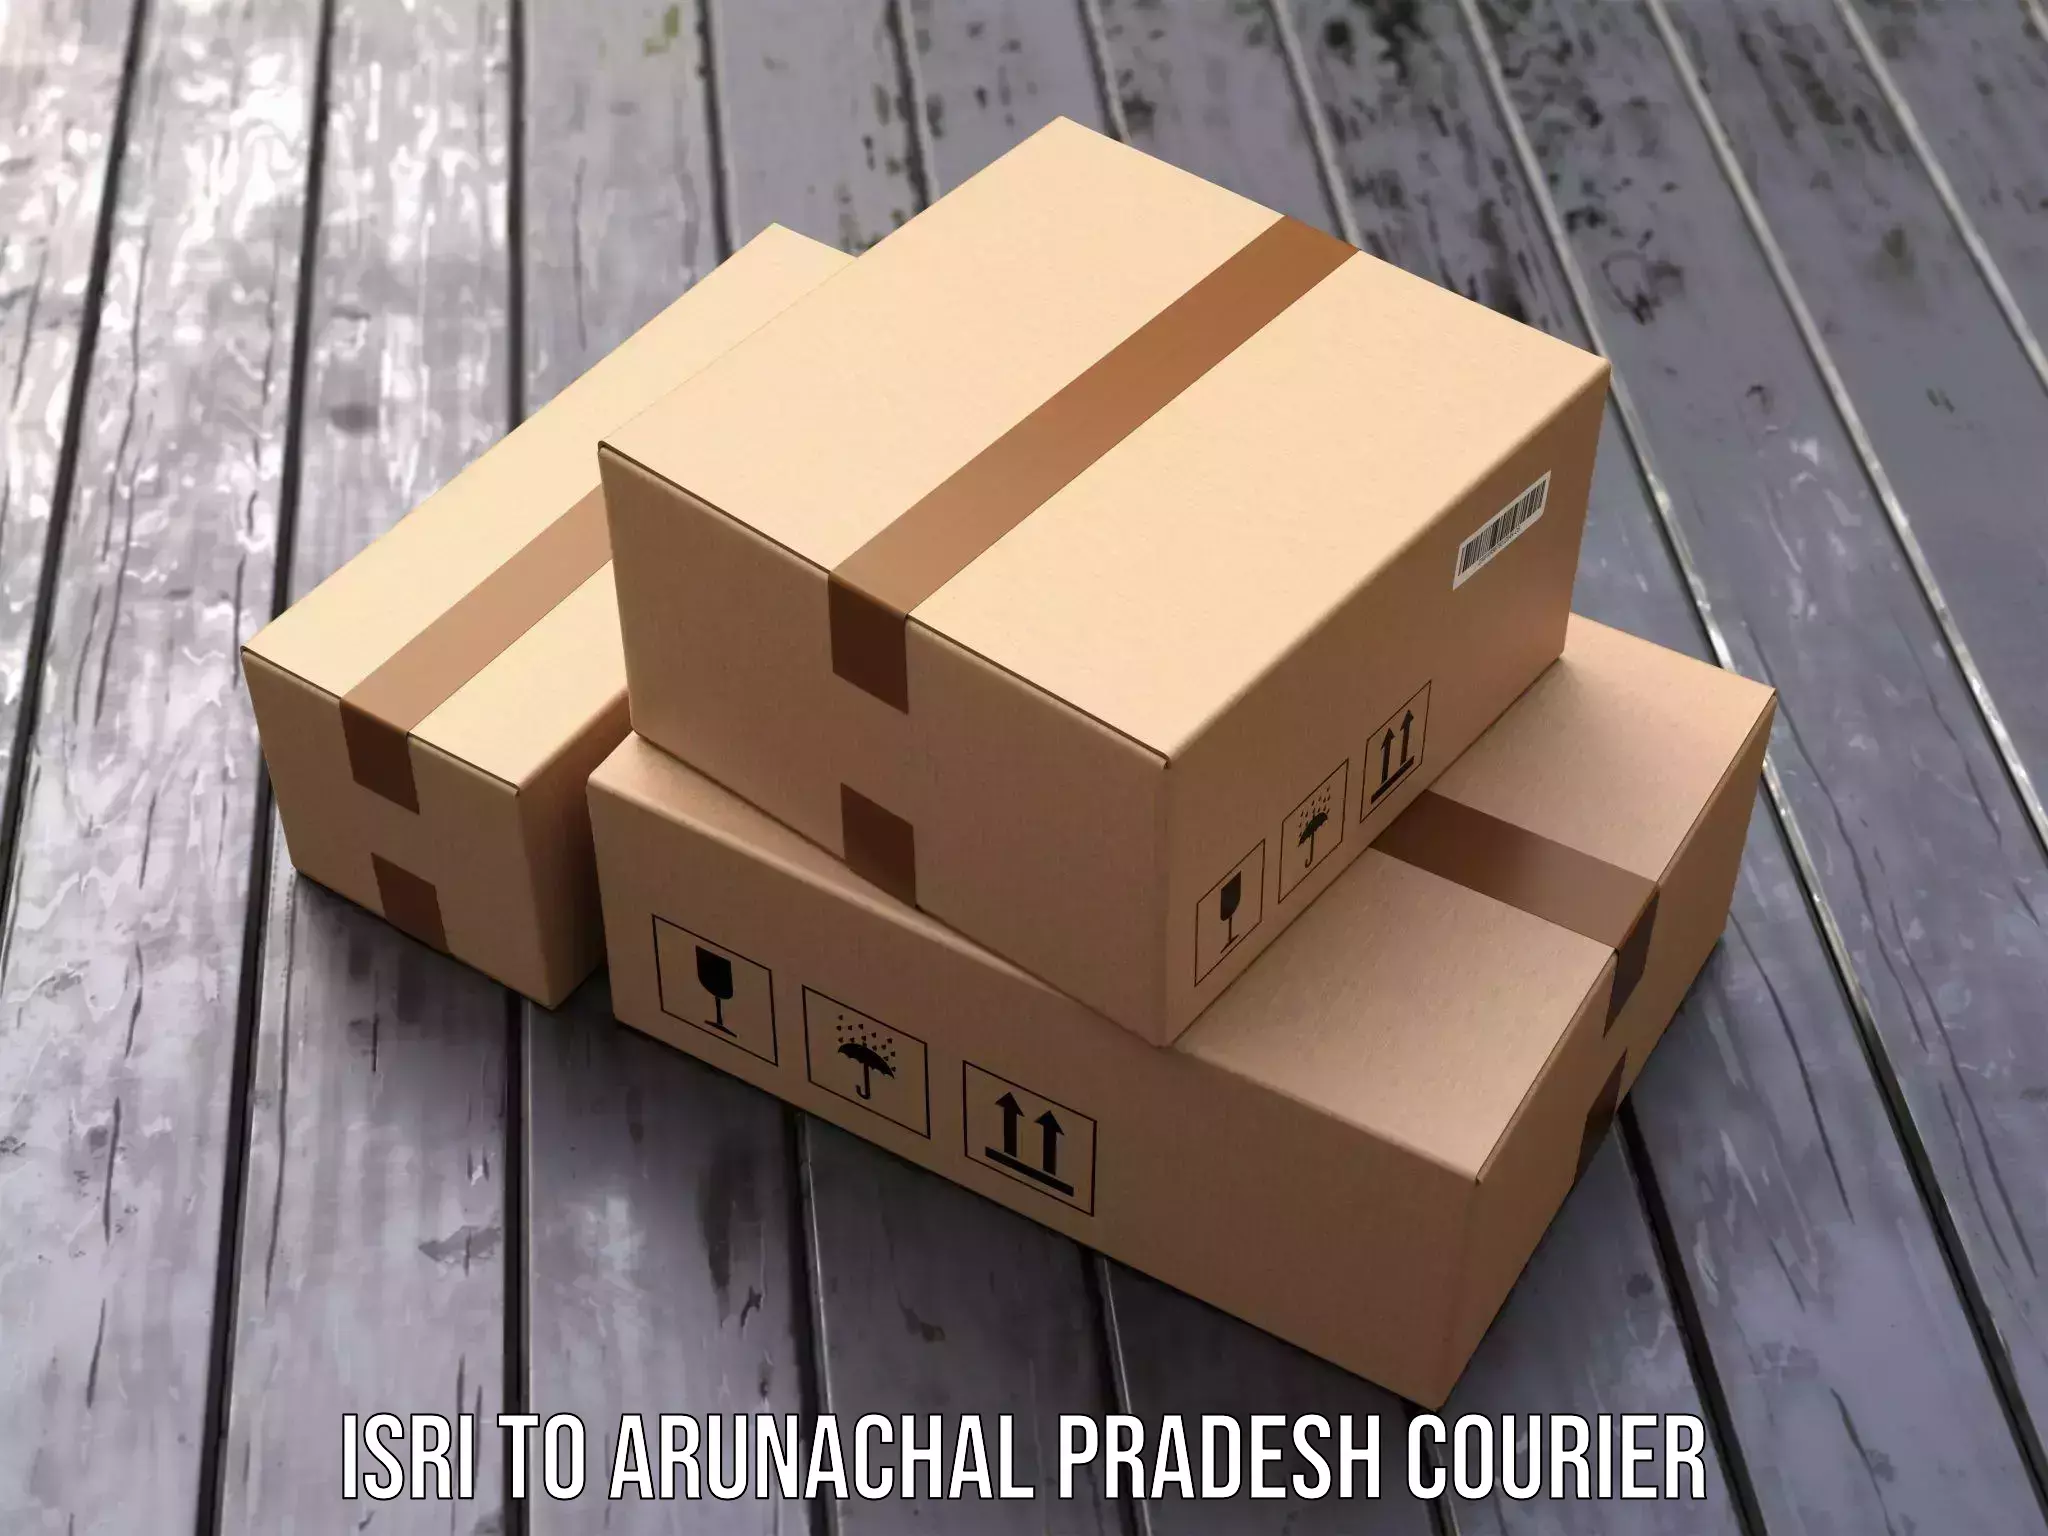 Quality courier partnerships Isri to Arunachal Pradesh